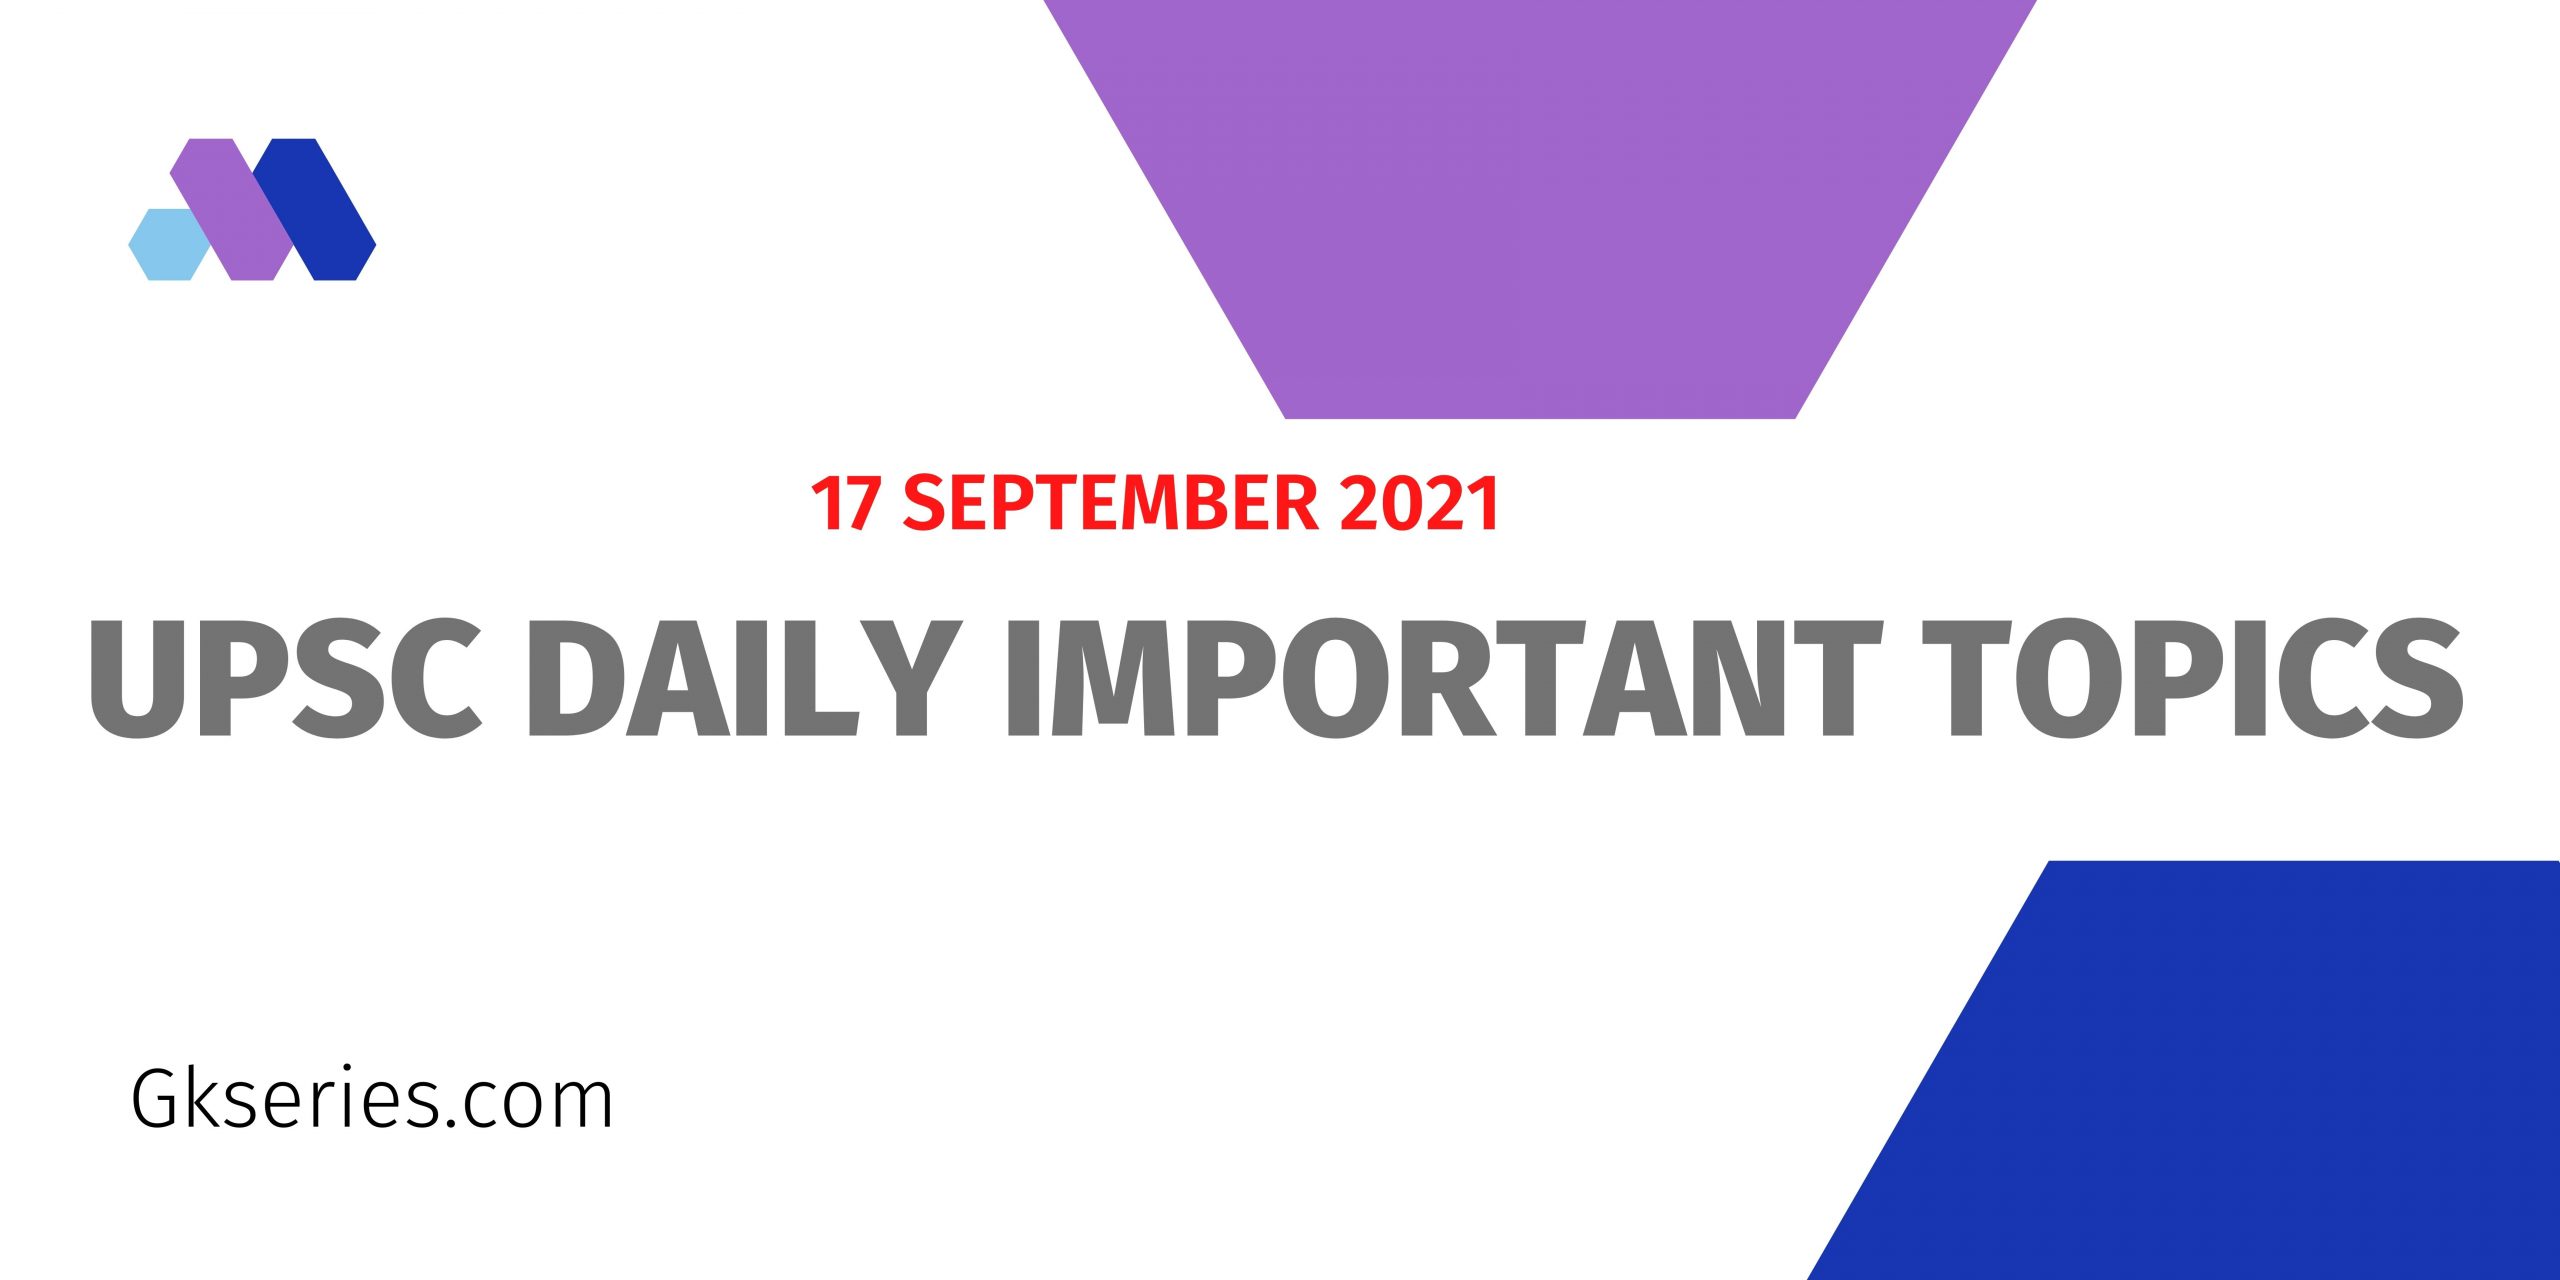 upsc important topics - 17 september 2021